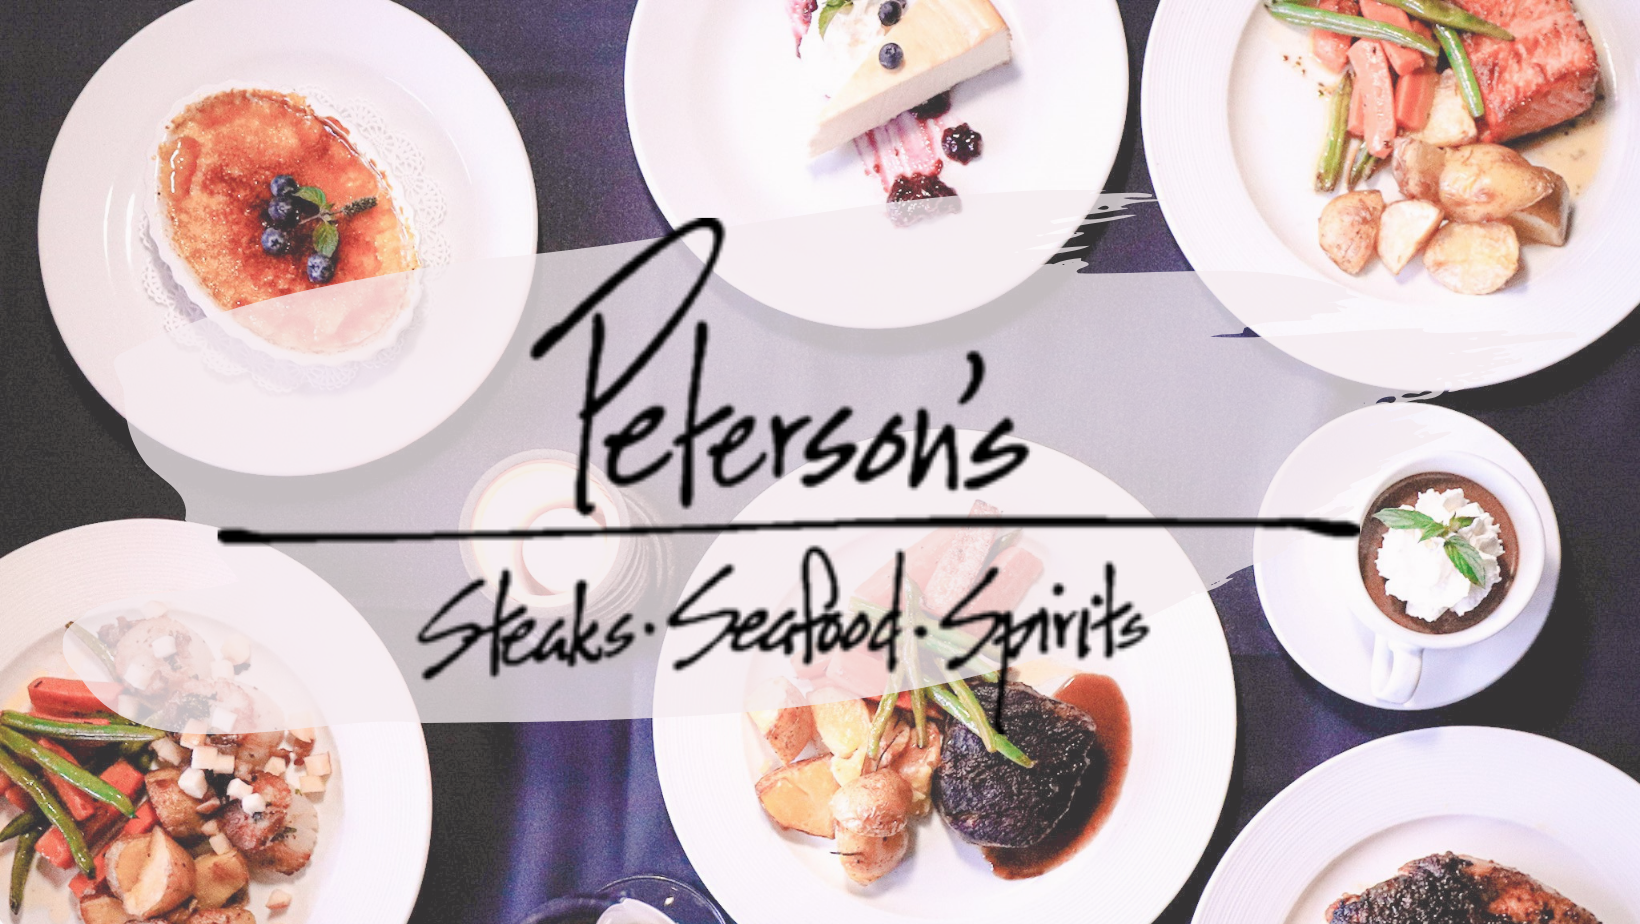 Peterson’s Restaurant